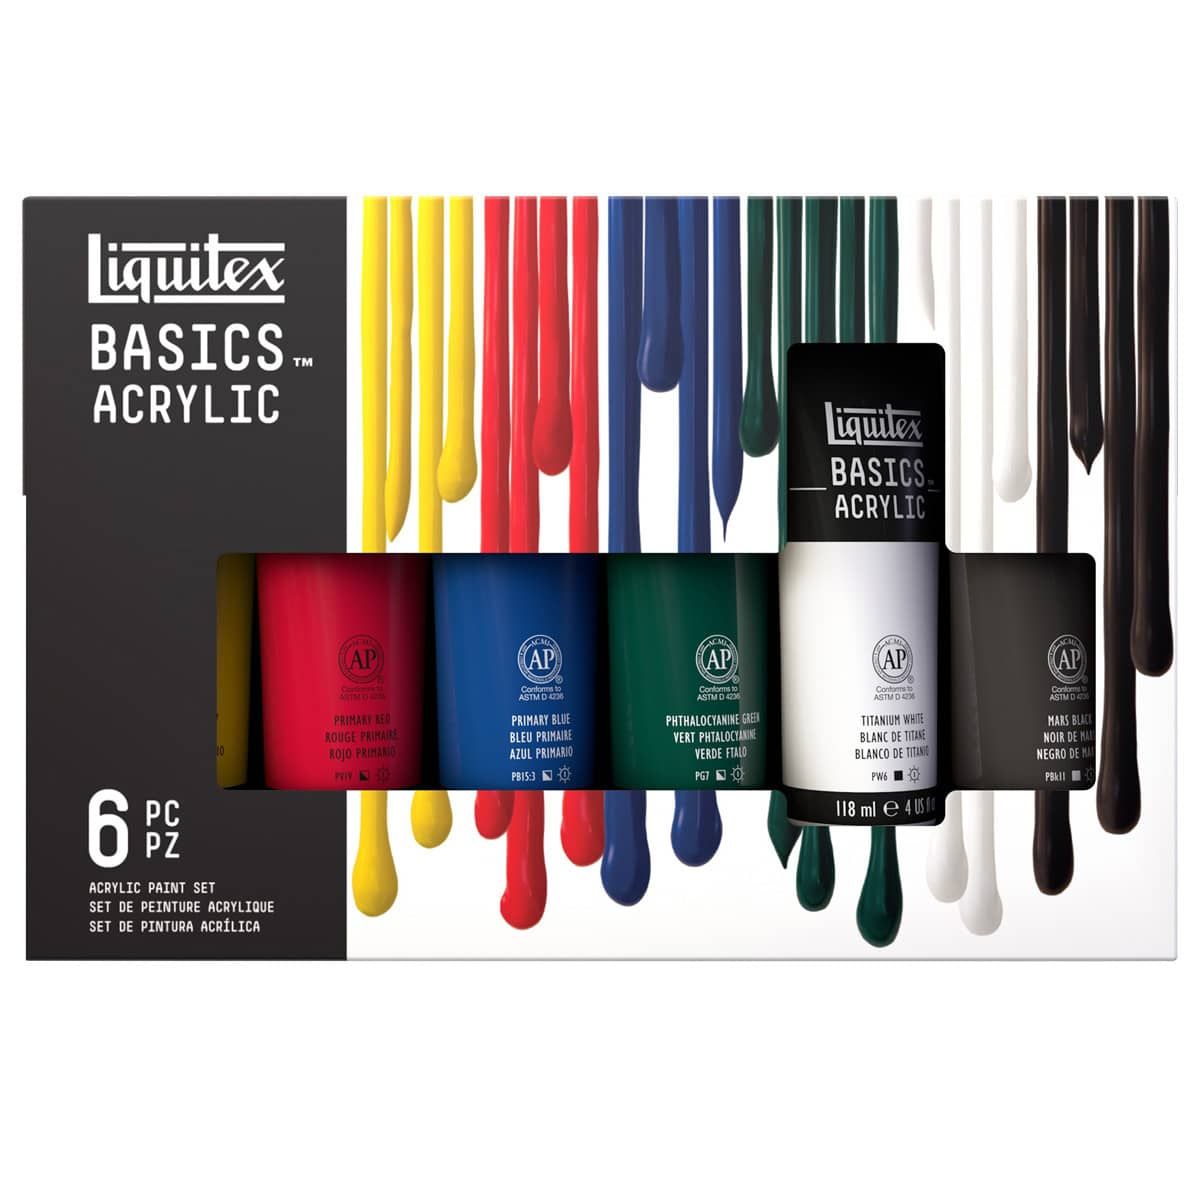 Liquitex Basics Acrylic Set - RISD Store, Liquitex Acrylic Paint Set